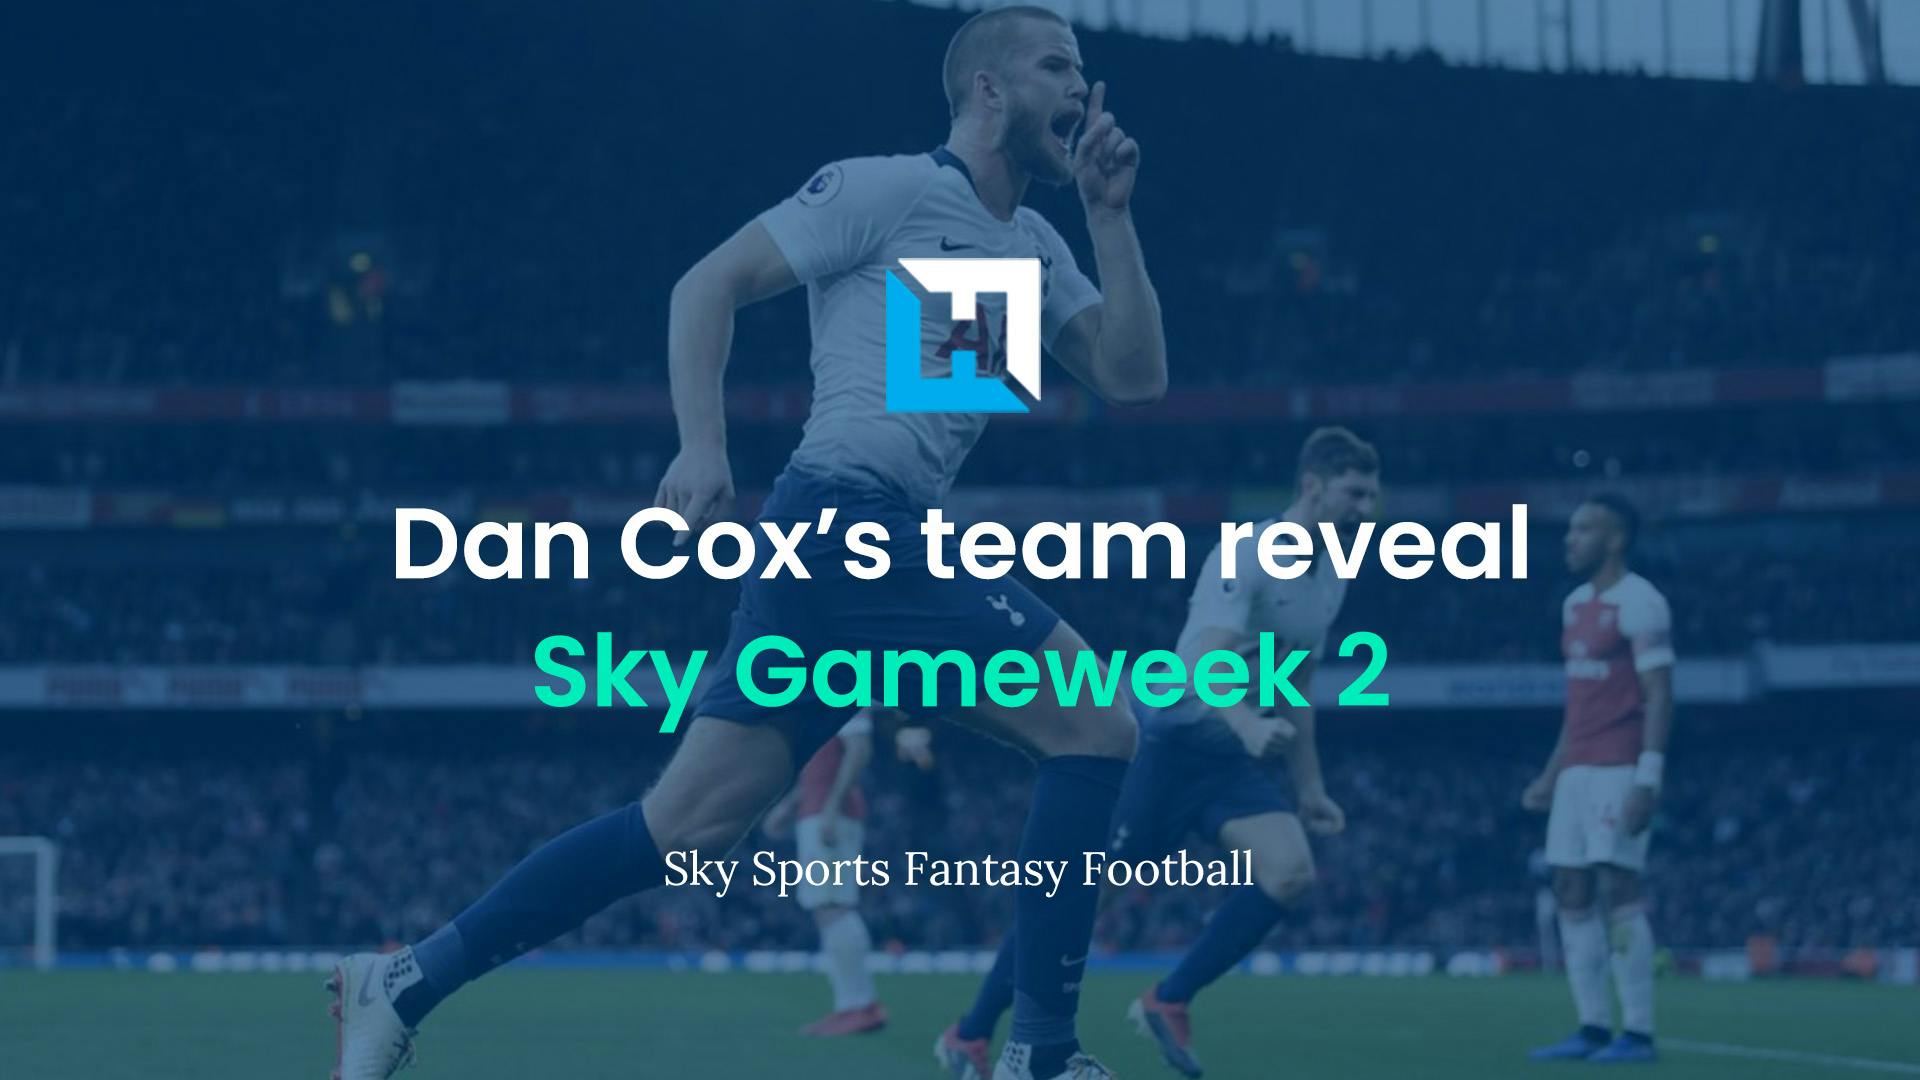 Sky Sports Fantasy Football Gameweek 2 preview | Dan Cox’s team reveal